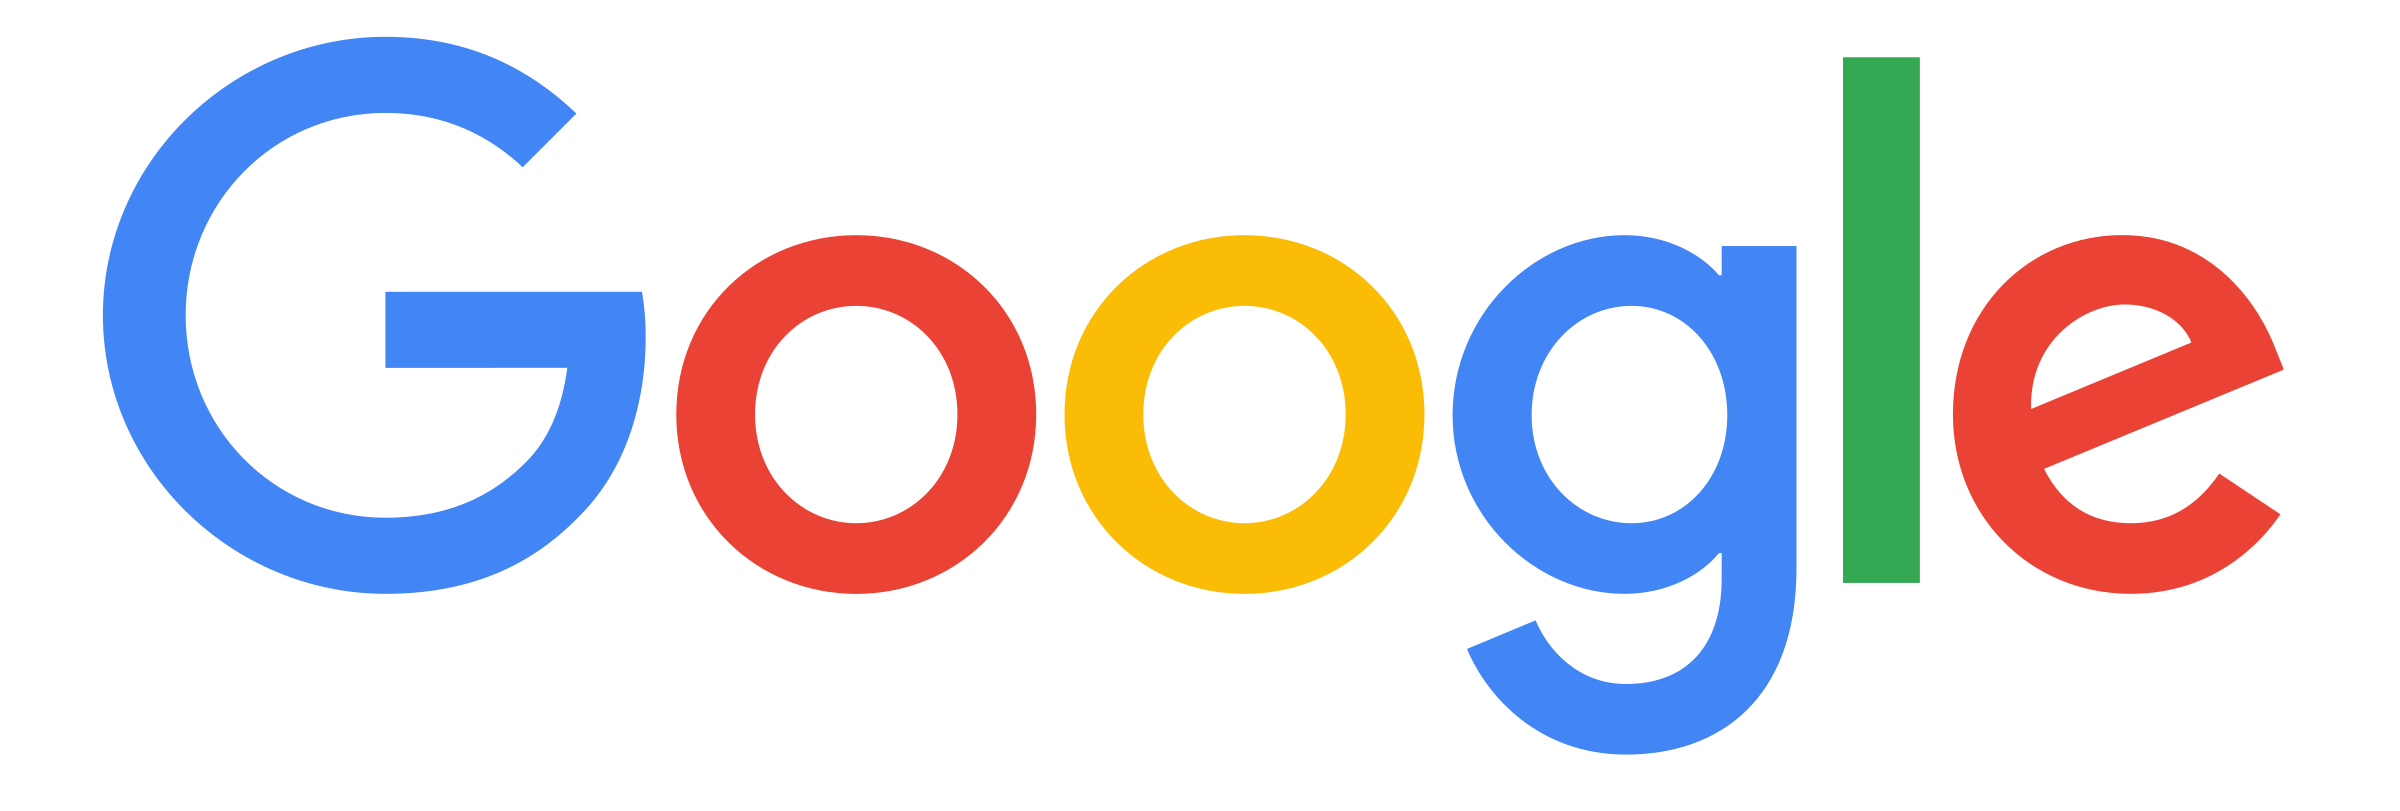 google-logo-transparent.png